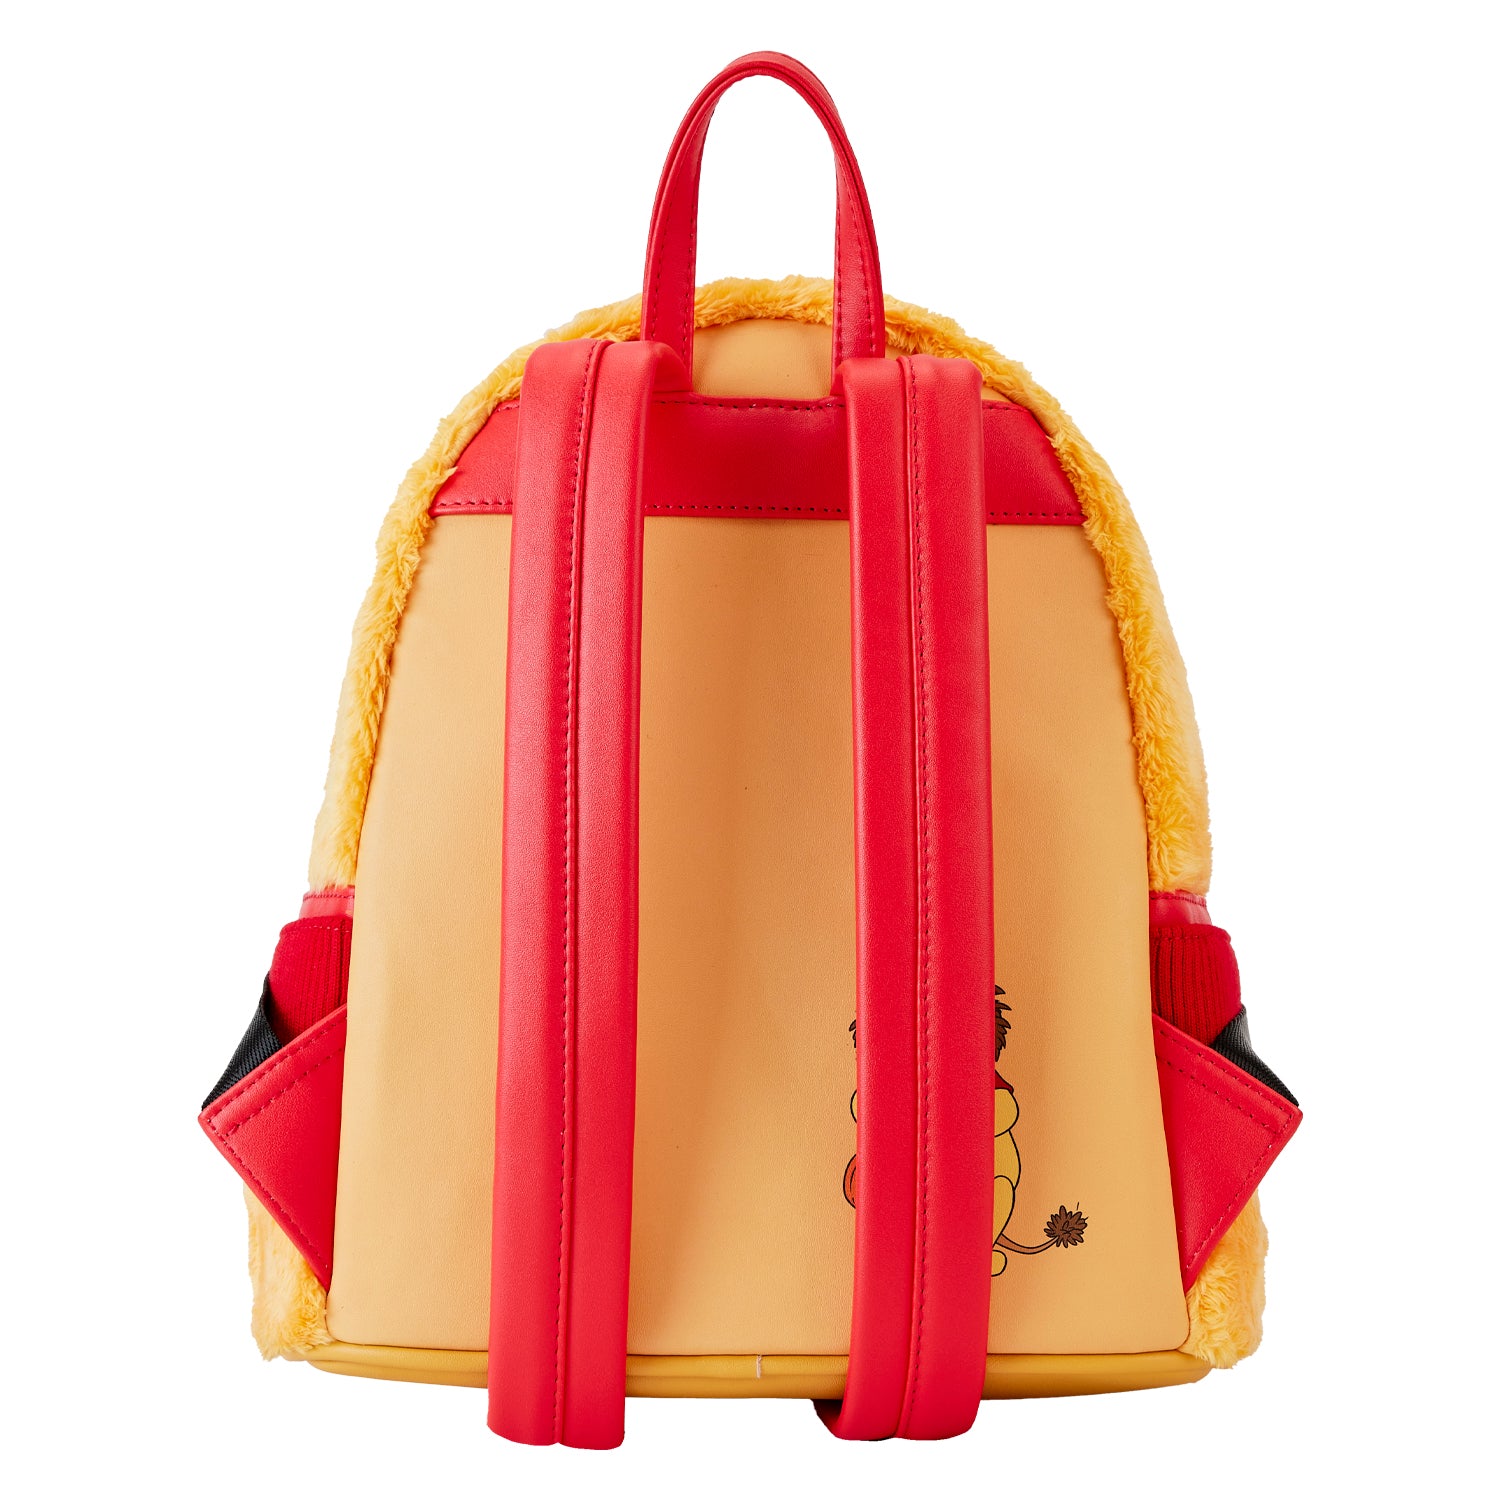 Disney | Winnie The Pooh Halloween Costume Cosplay Mini Backpack